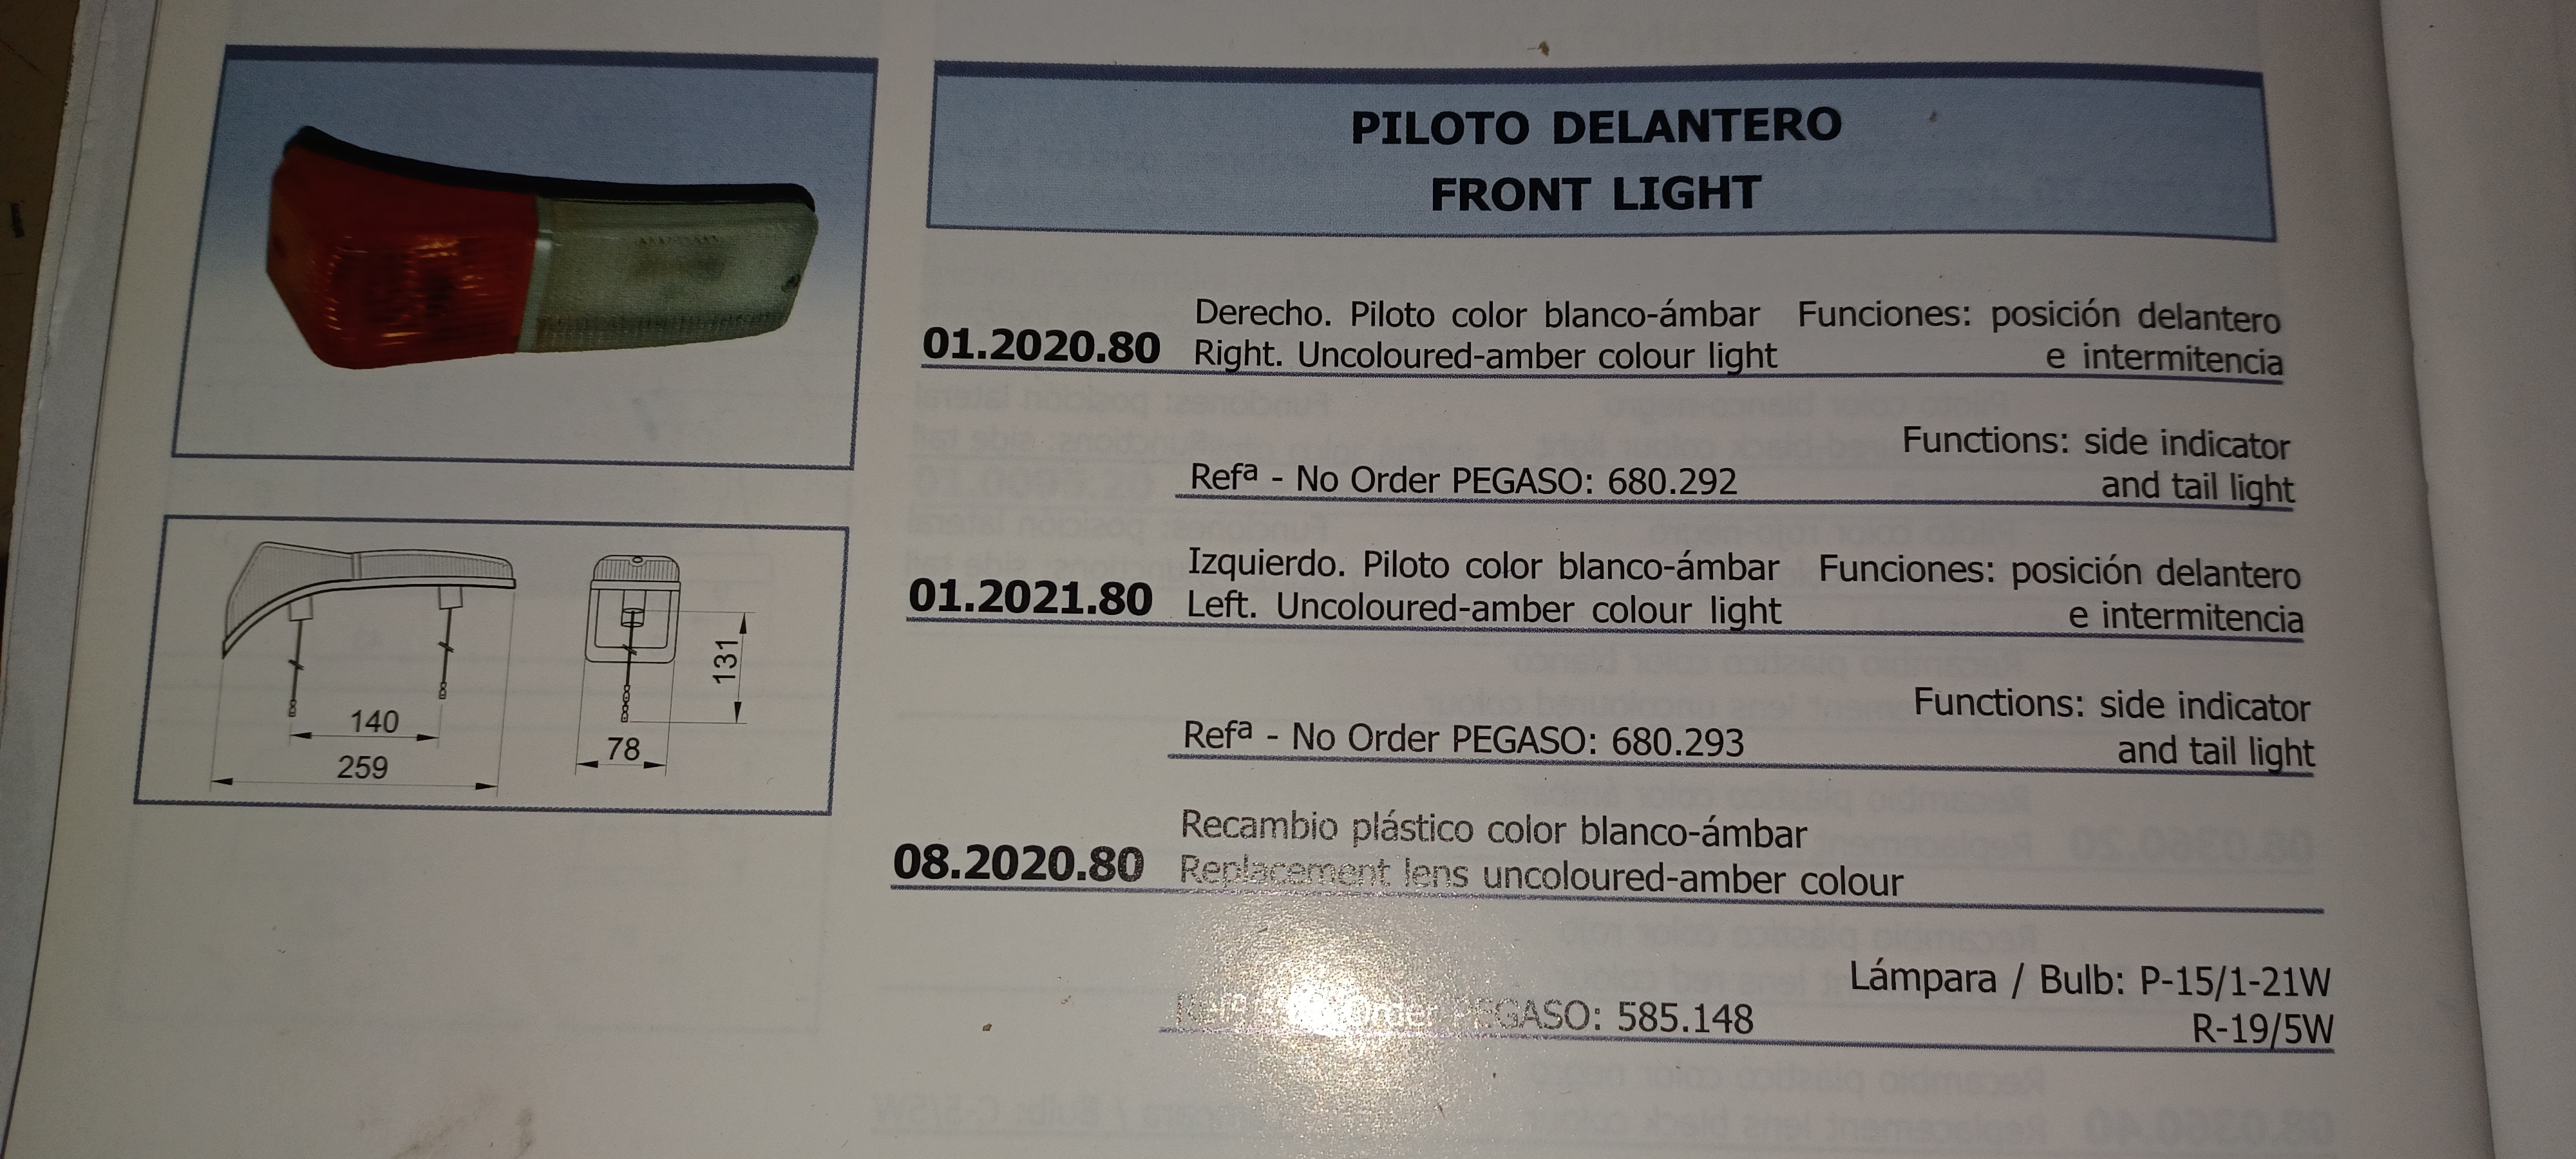 *PILOTO ANTERIOR PEGASO BICOLOR DR 01202080 MEYPLA